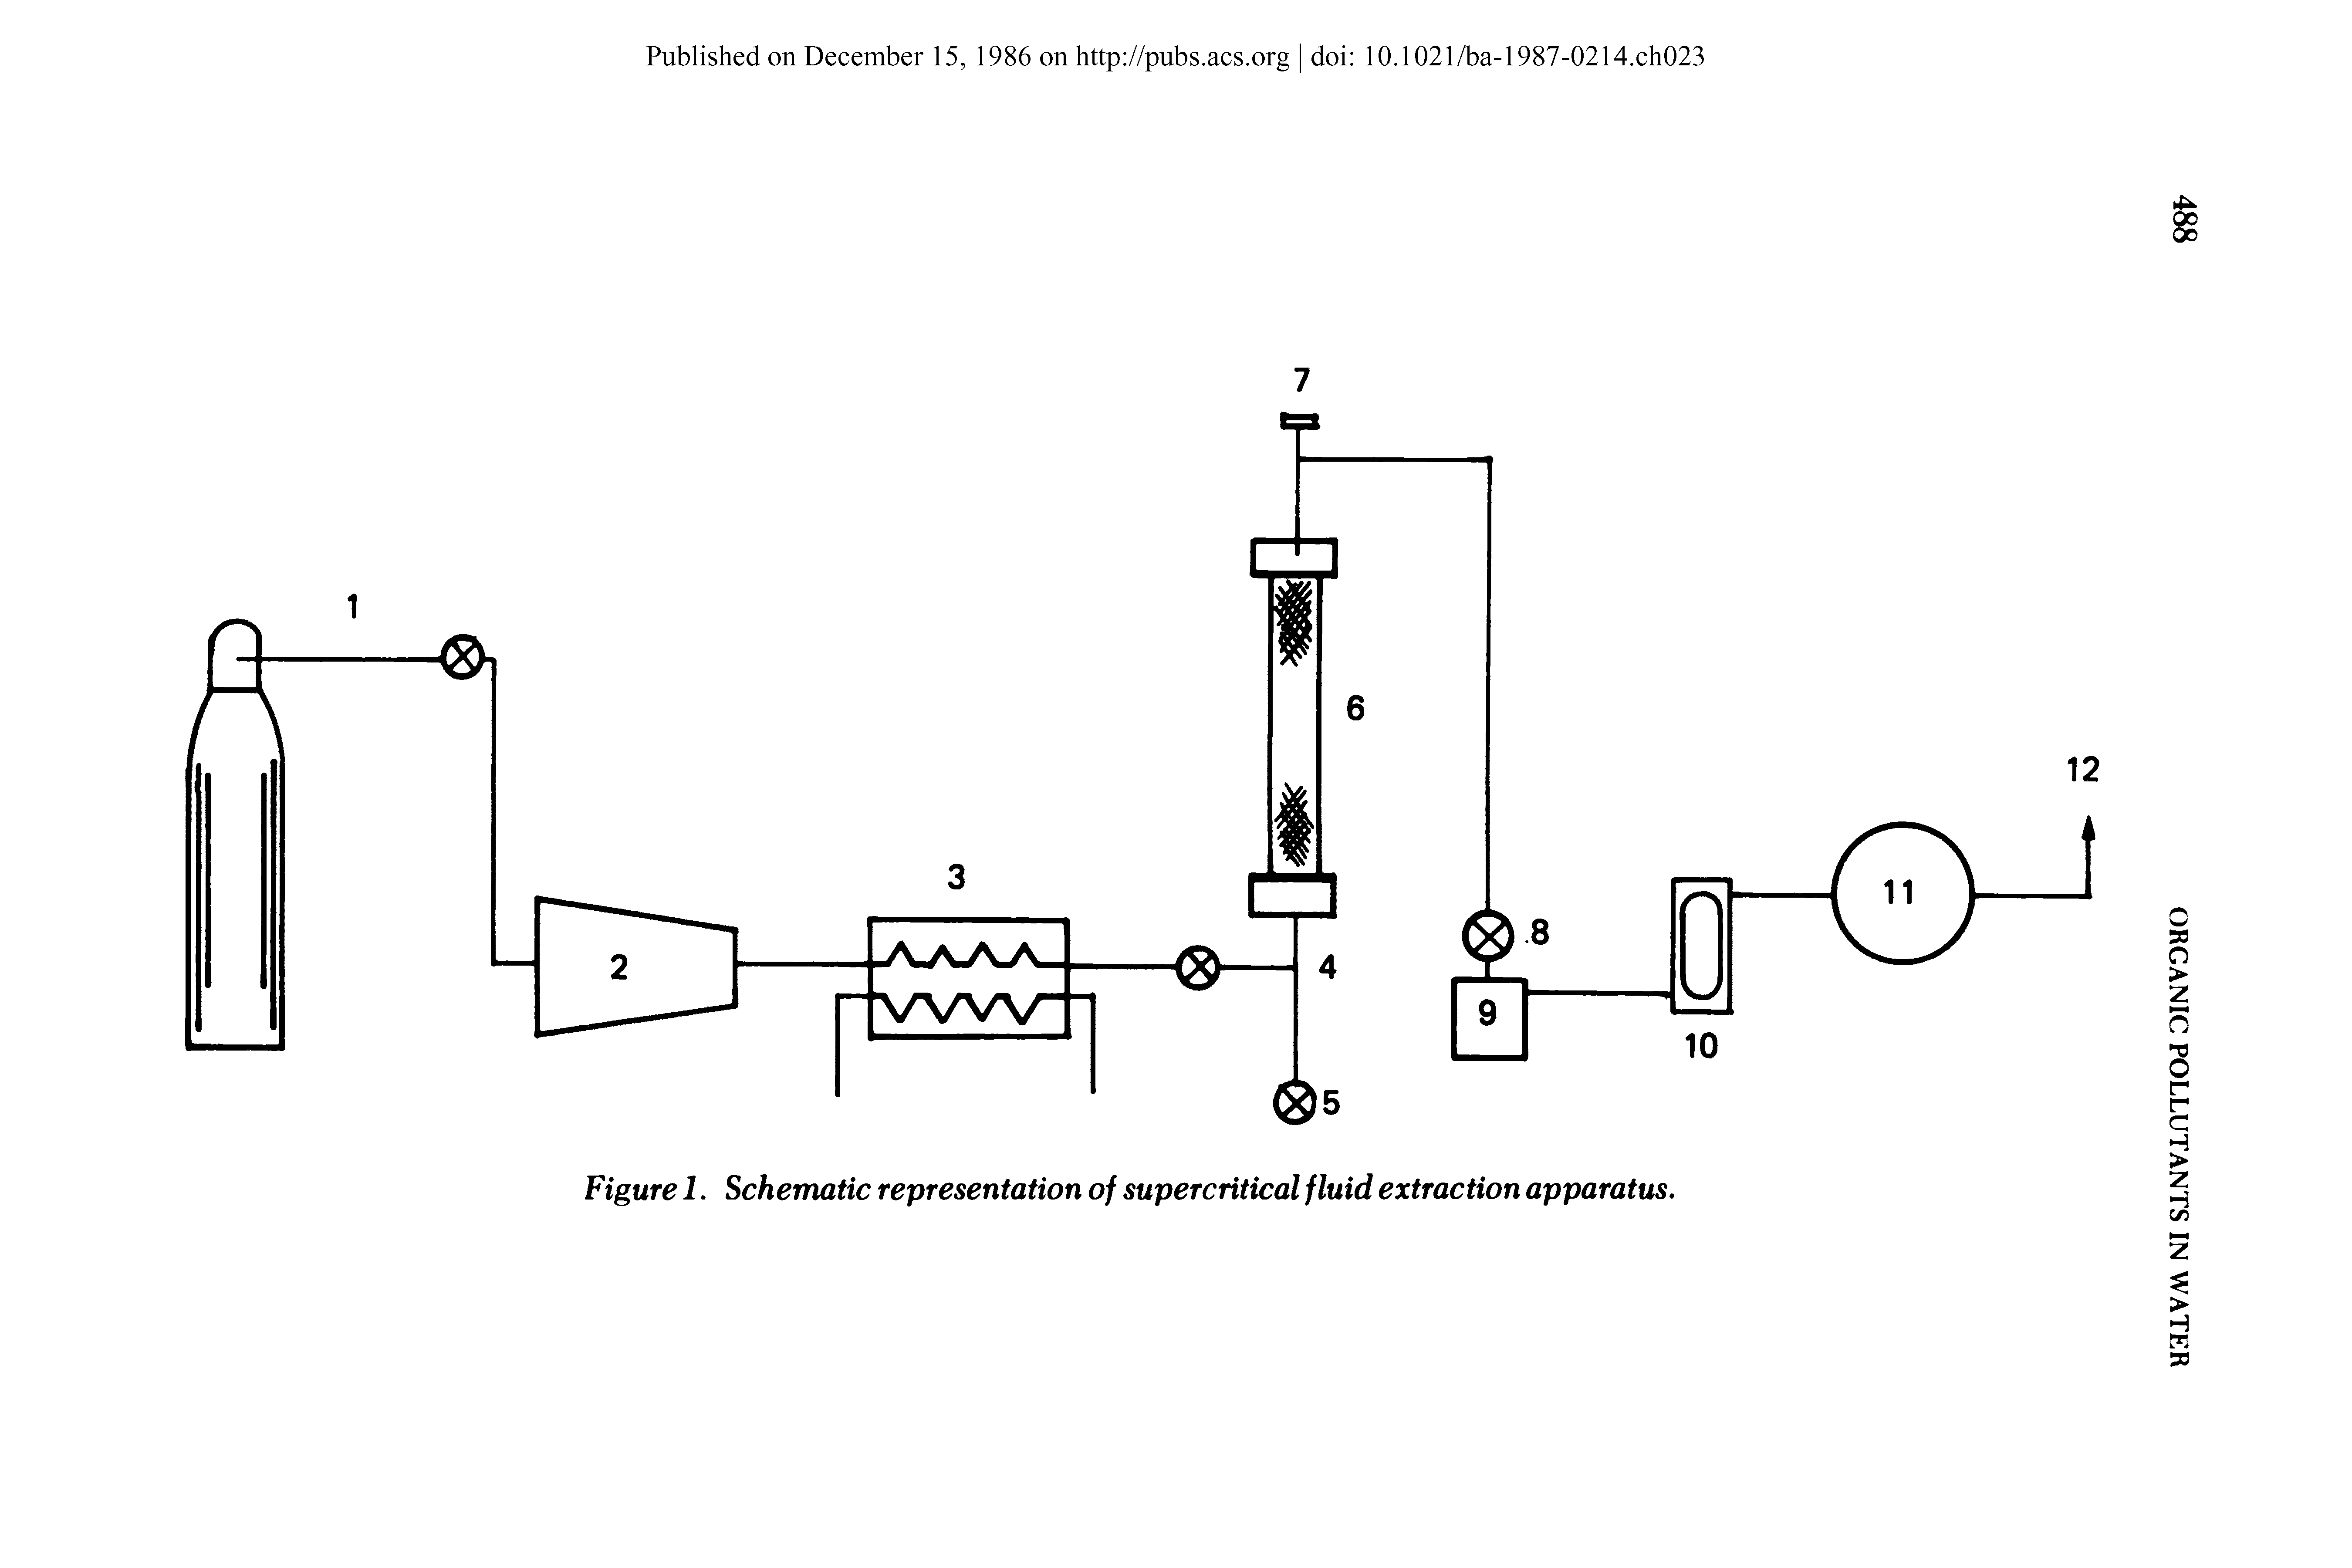 Figure 1. Schematic representation of supercritical fluid extraction apparatus.